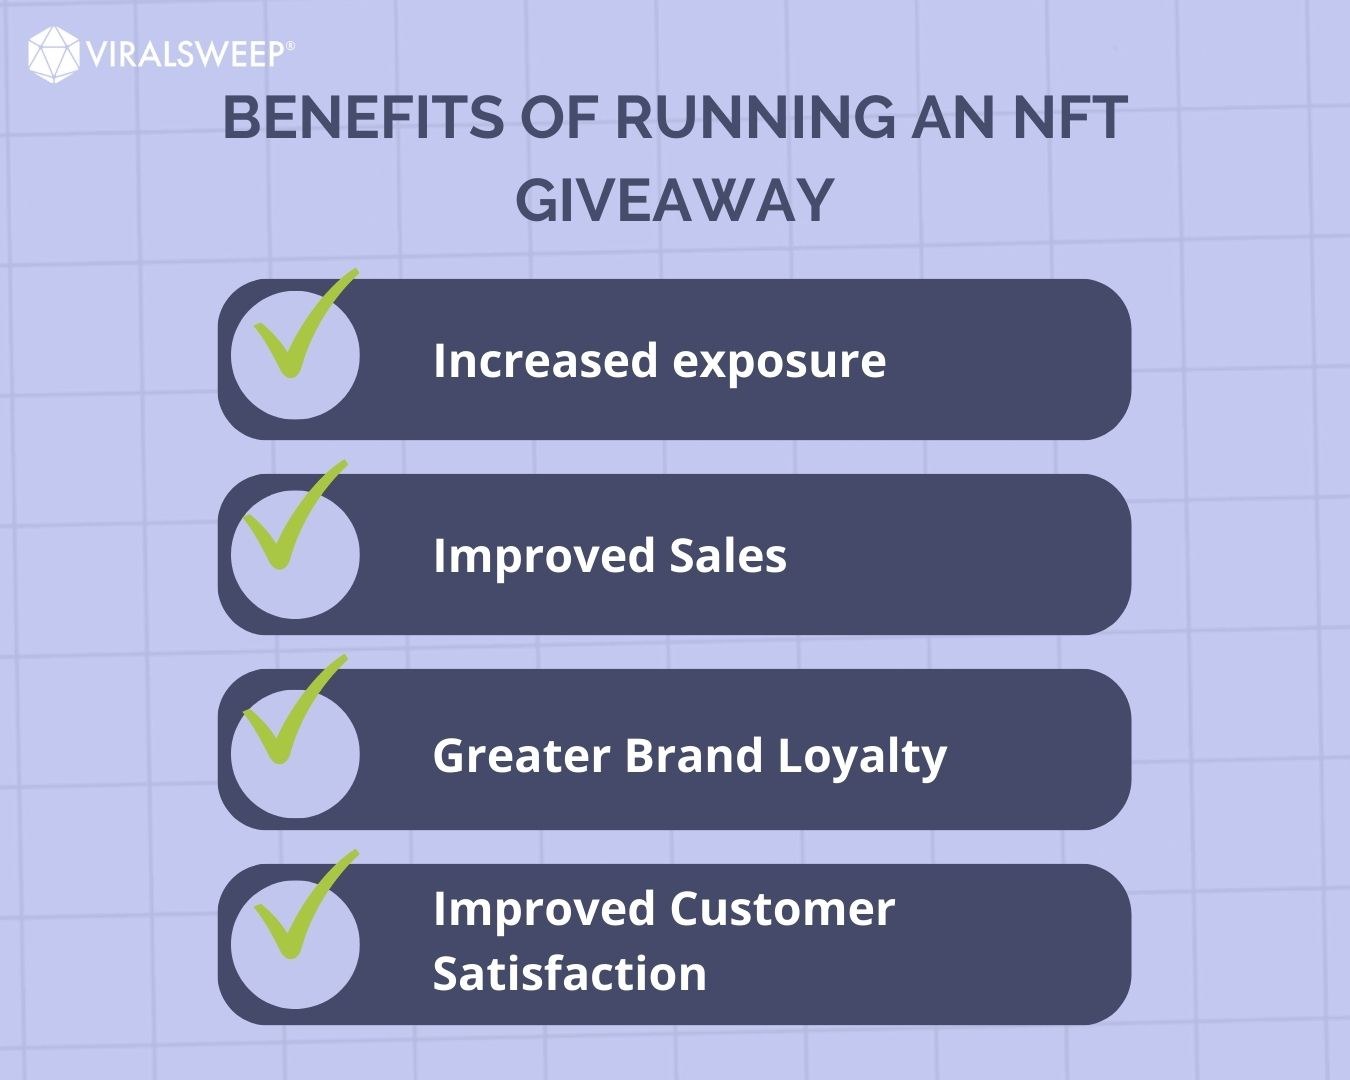 Benefits of running an NFT giveaway